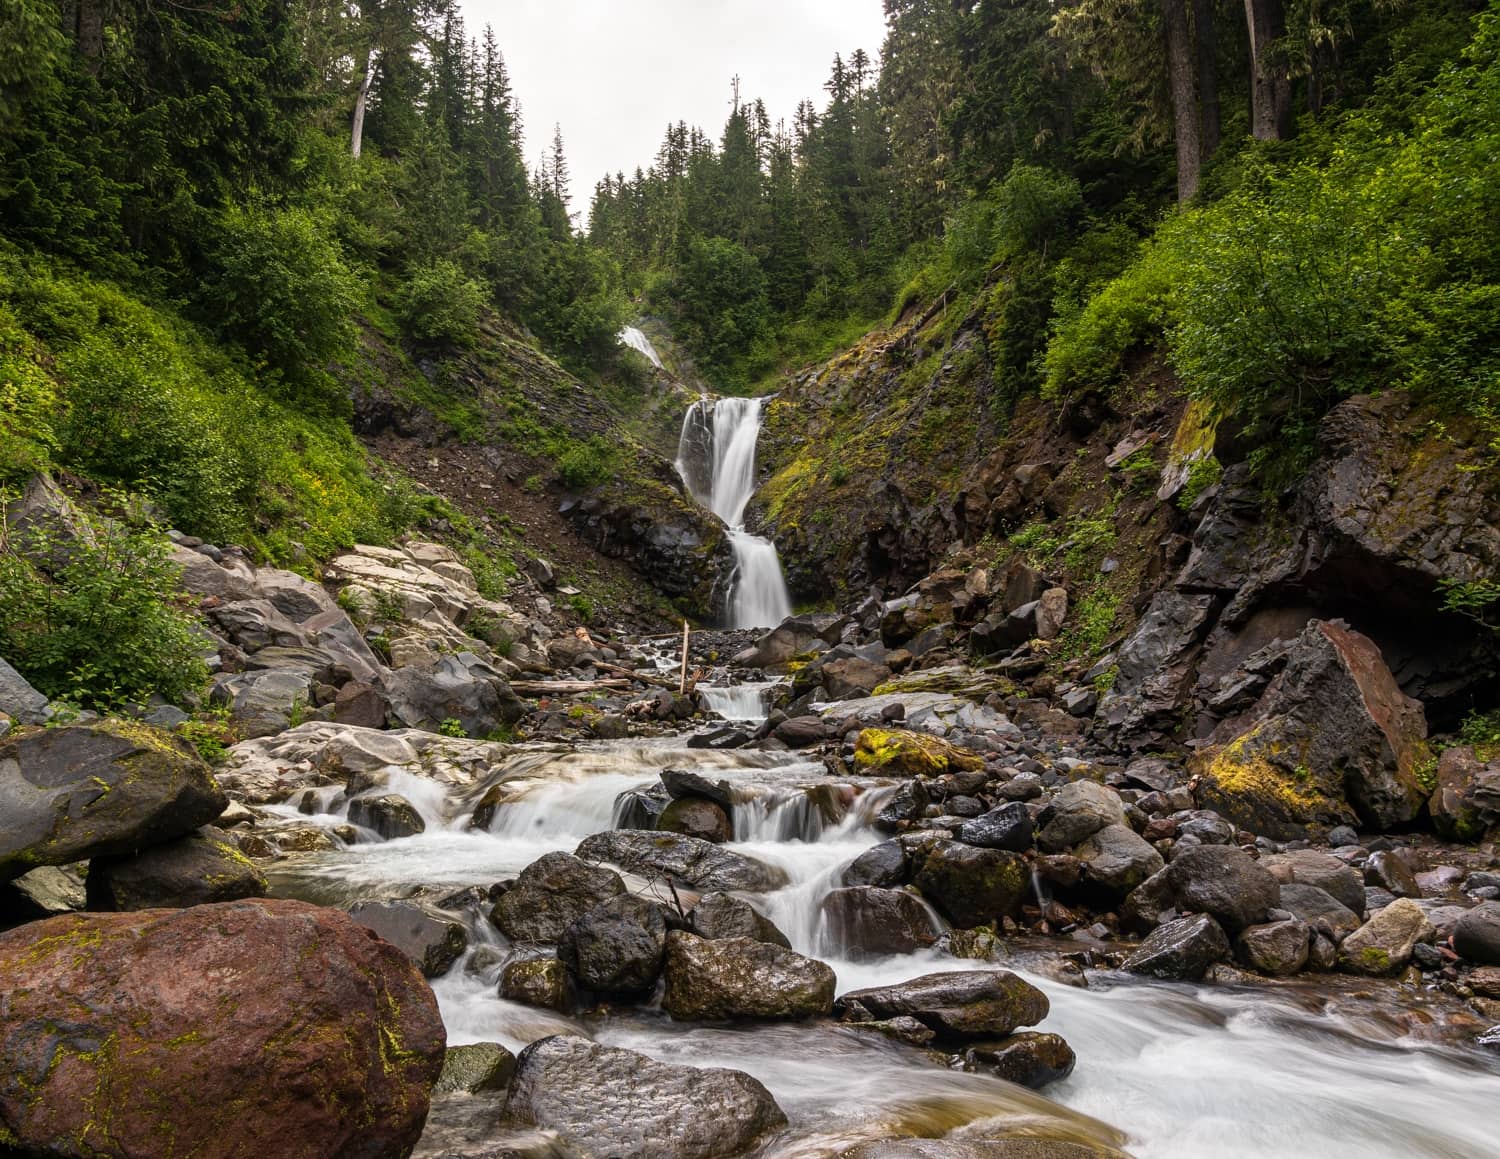 Mount Rainier Waterfall Elopement Packages